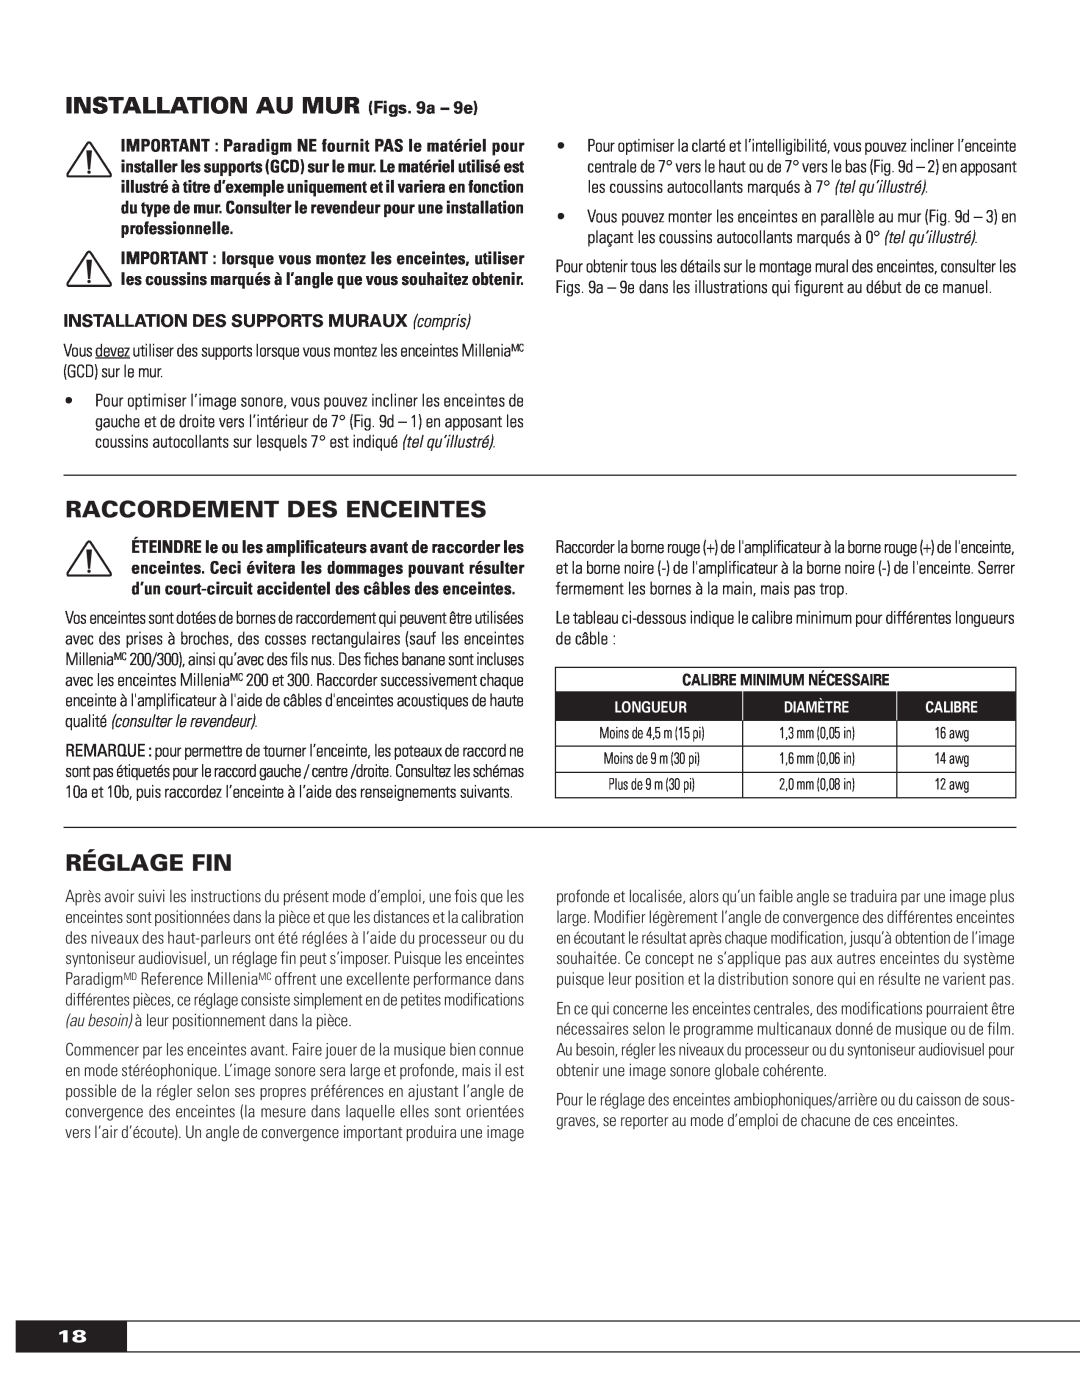 Paradigm OM-575 owner manual INSTALLATION AU MUR Figs. 9a - 9e, Raccordement Des Enceintes, Réglage Fin 